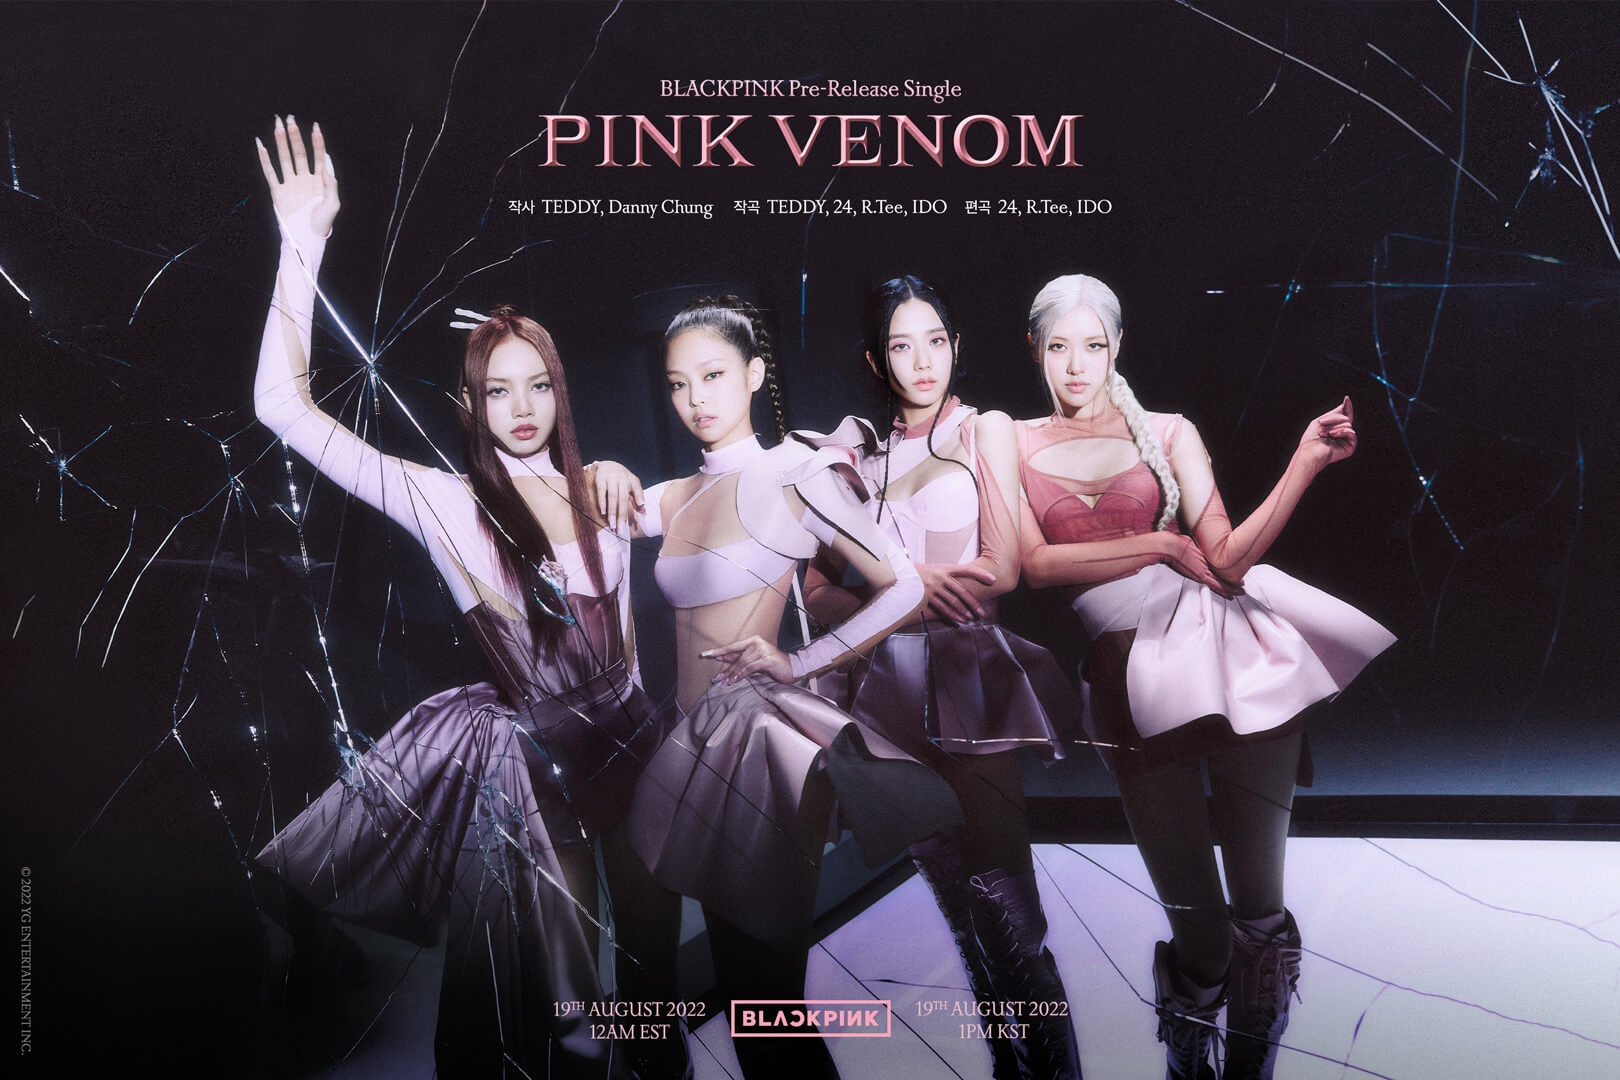 BLACKPINK members Lisa, Jennie, Jisoo, and Rose pose for August 19, 2022 single "Pink Venom." 